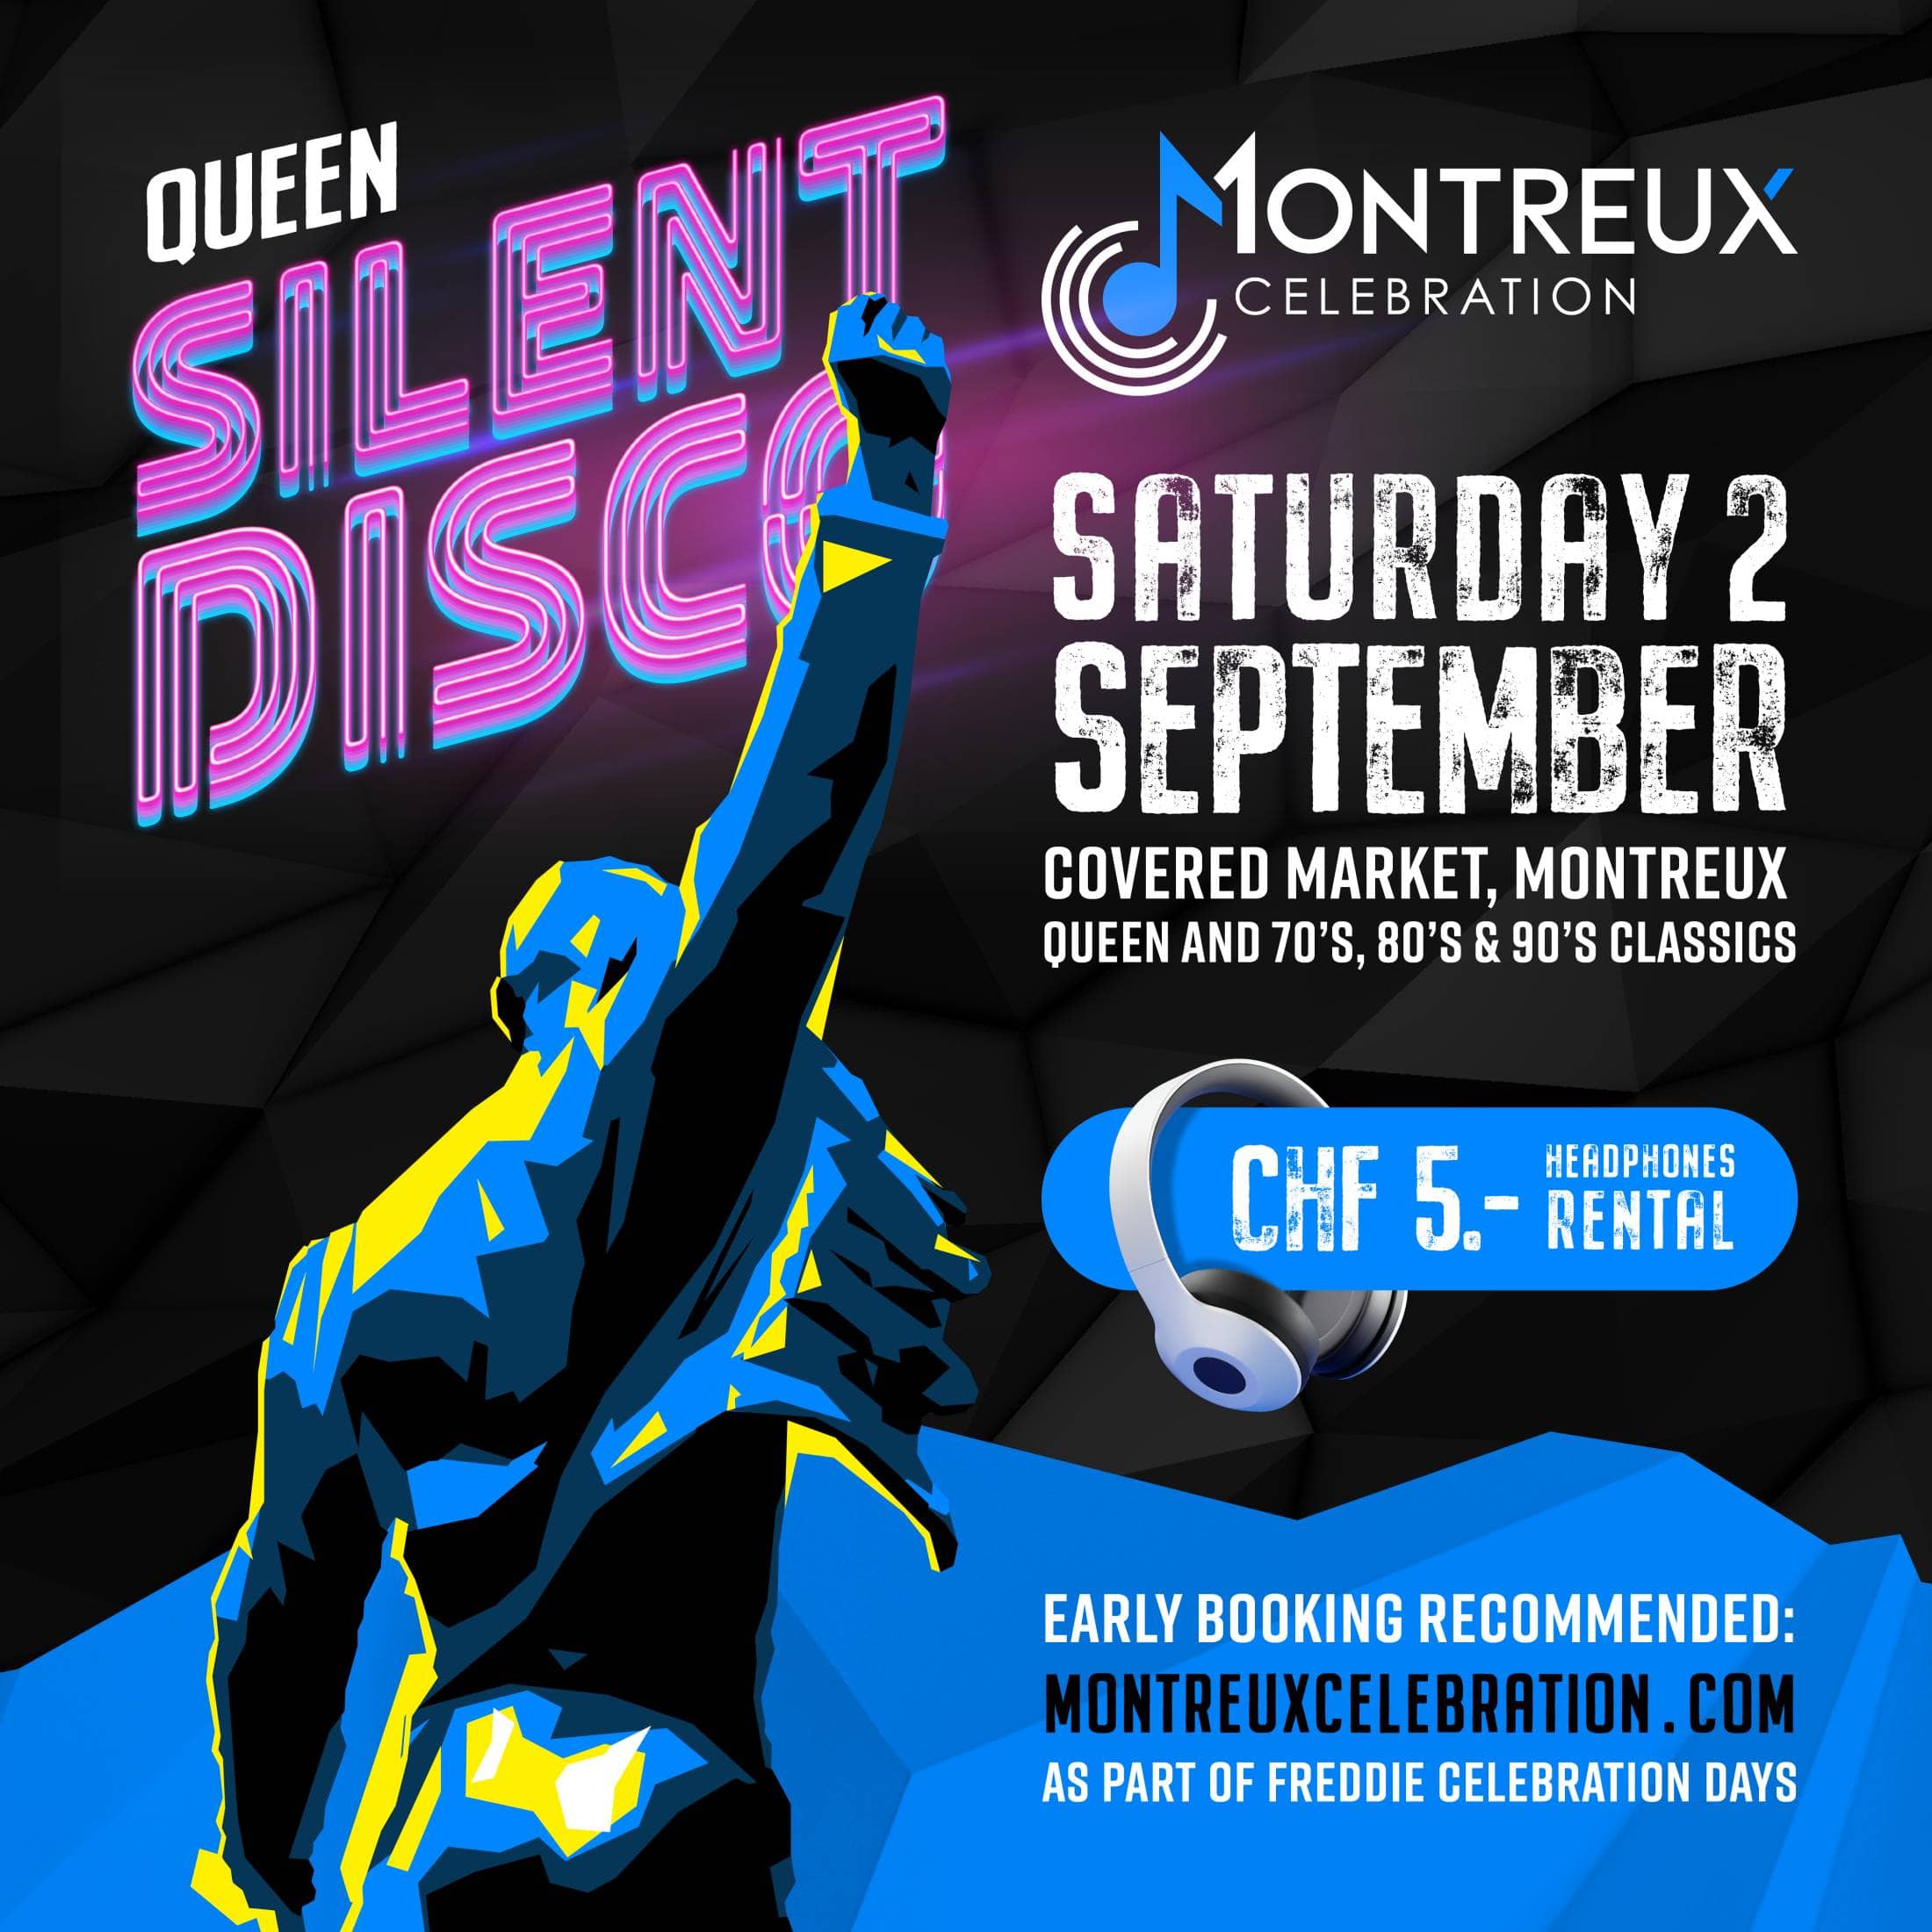 Queen Silent Disco - par silent-disco.com